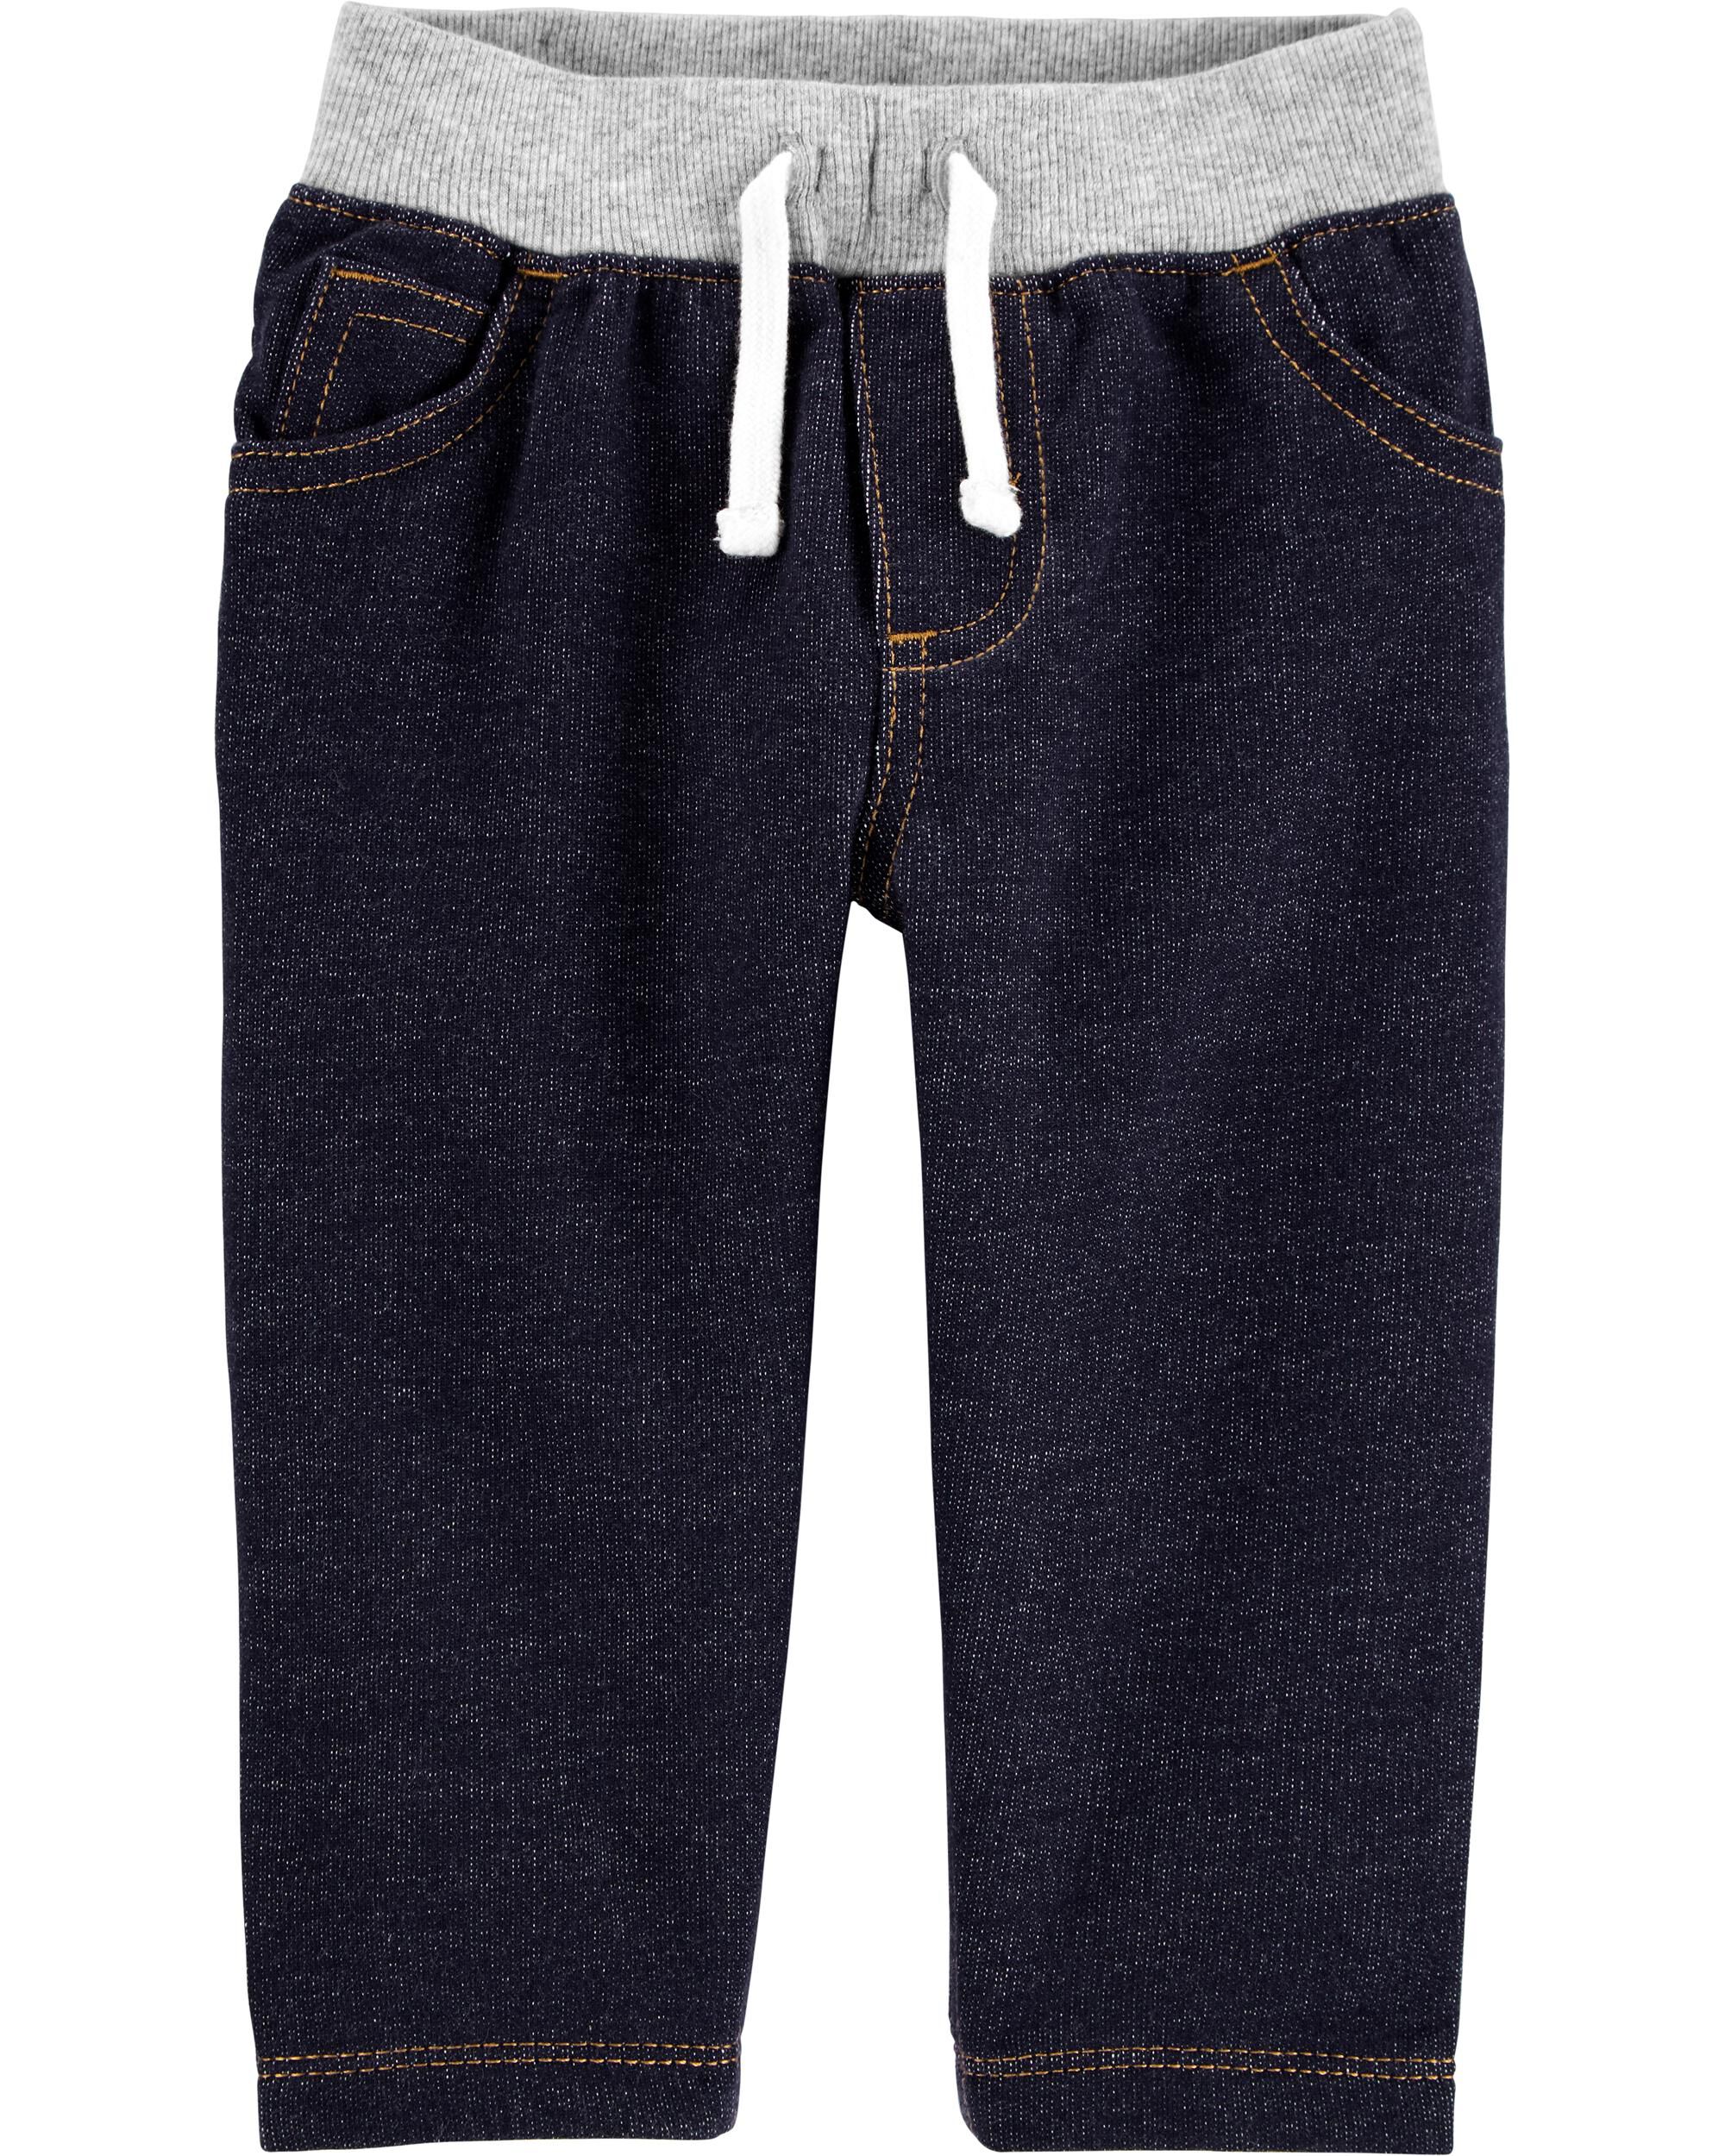 Pull-On Knit Denim Pants | carters.com